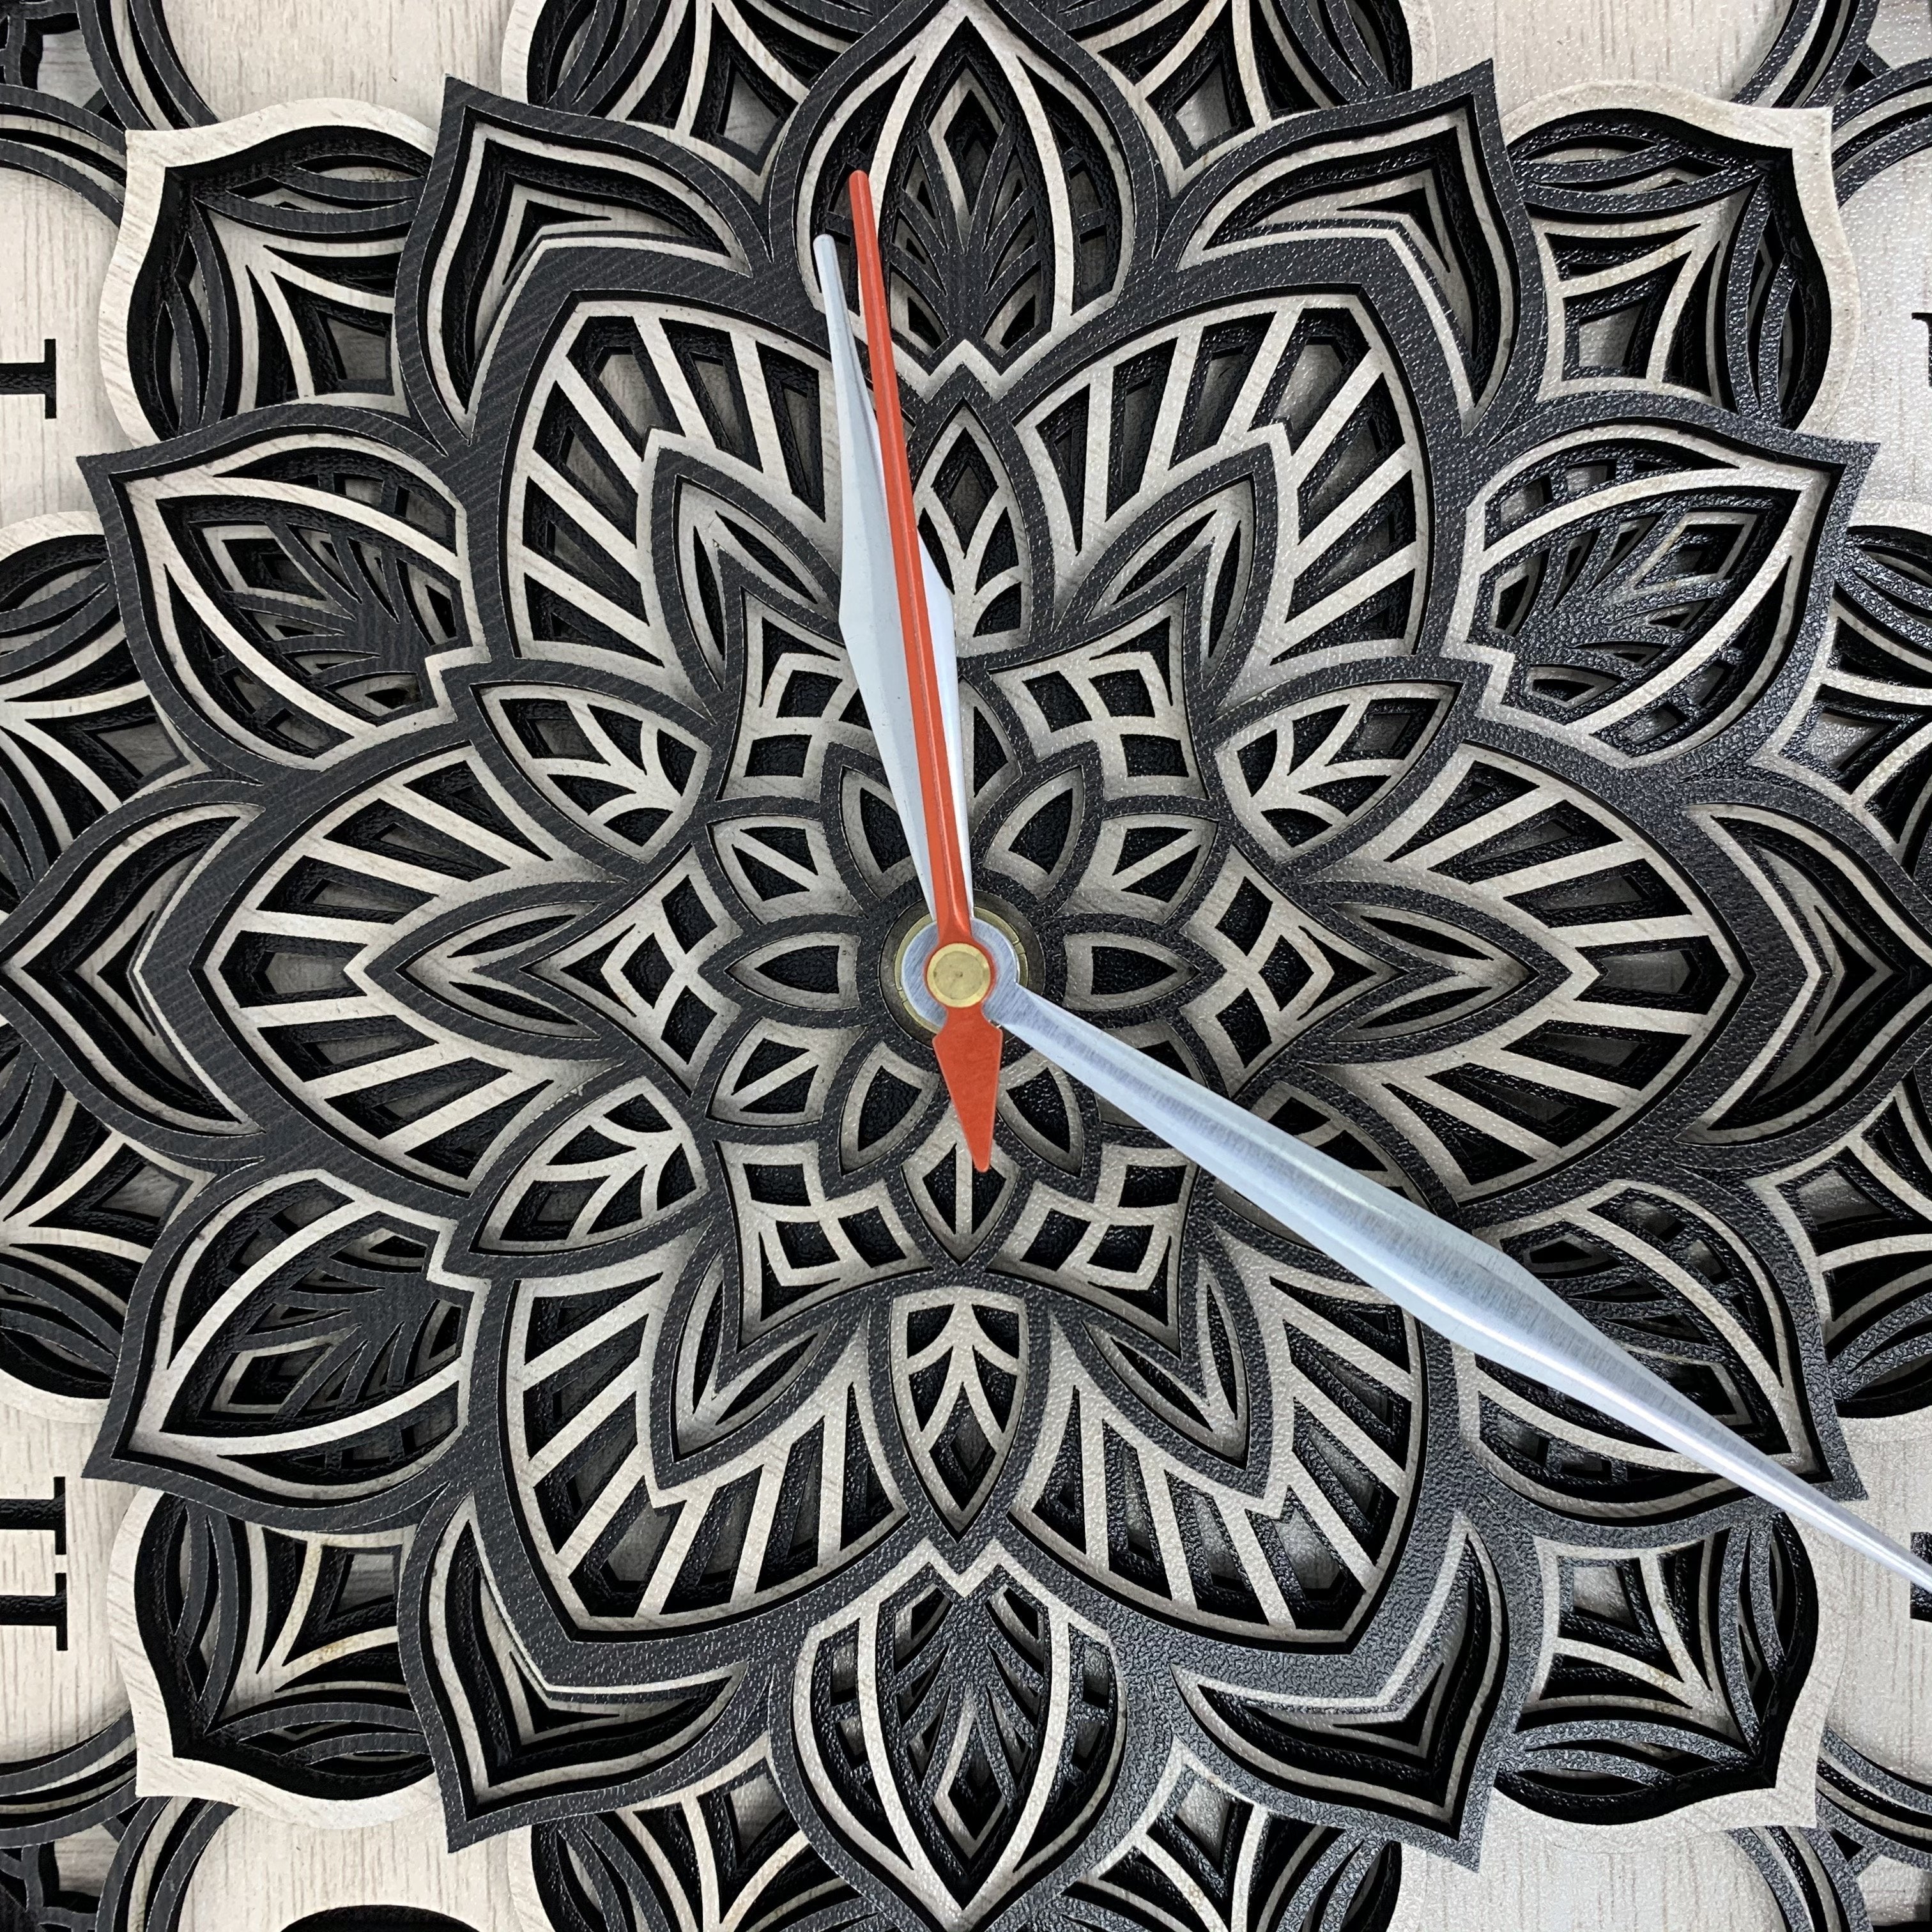 Aspiring Flower 3D Multilayered Mandala Wall Clock